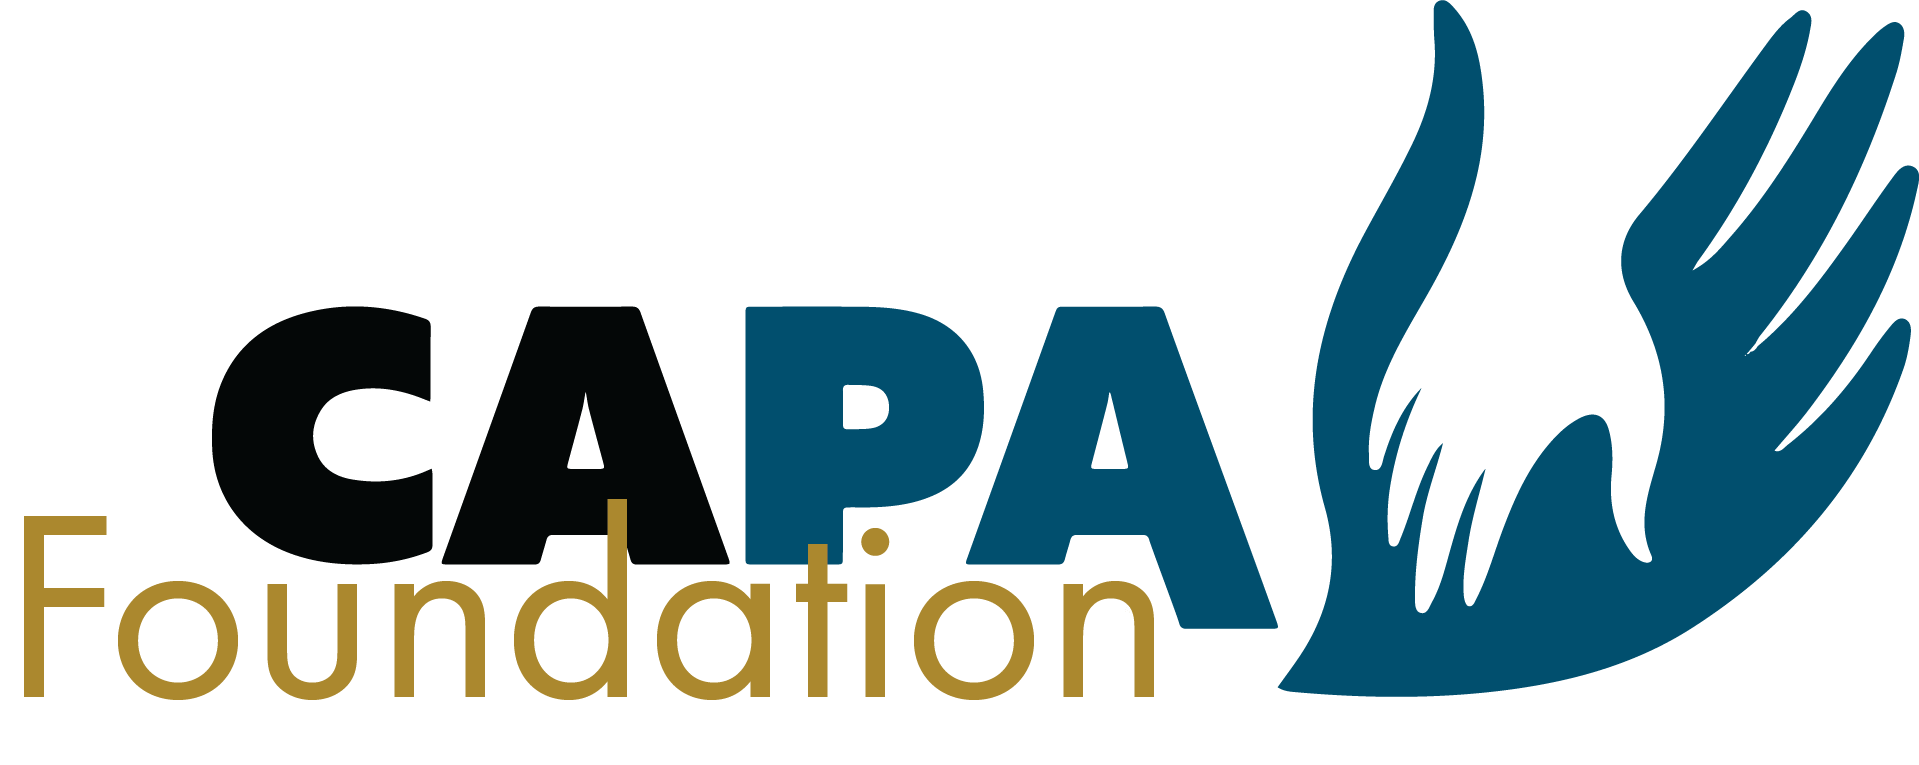 CAPA_foundation_logo_final (1)